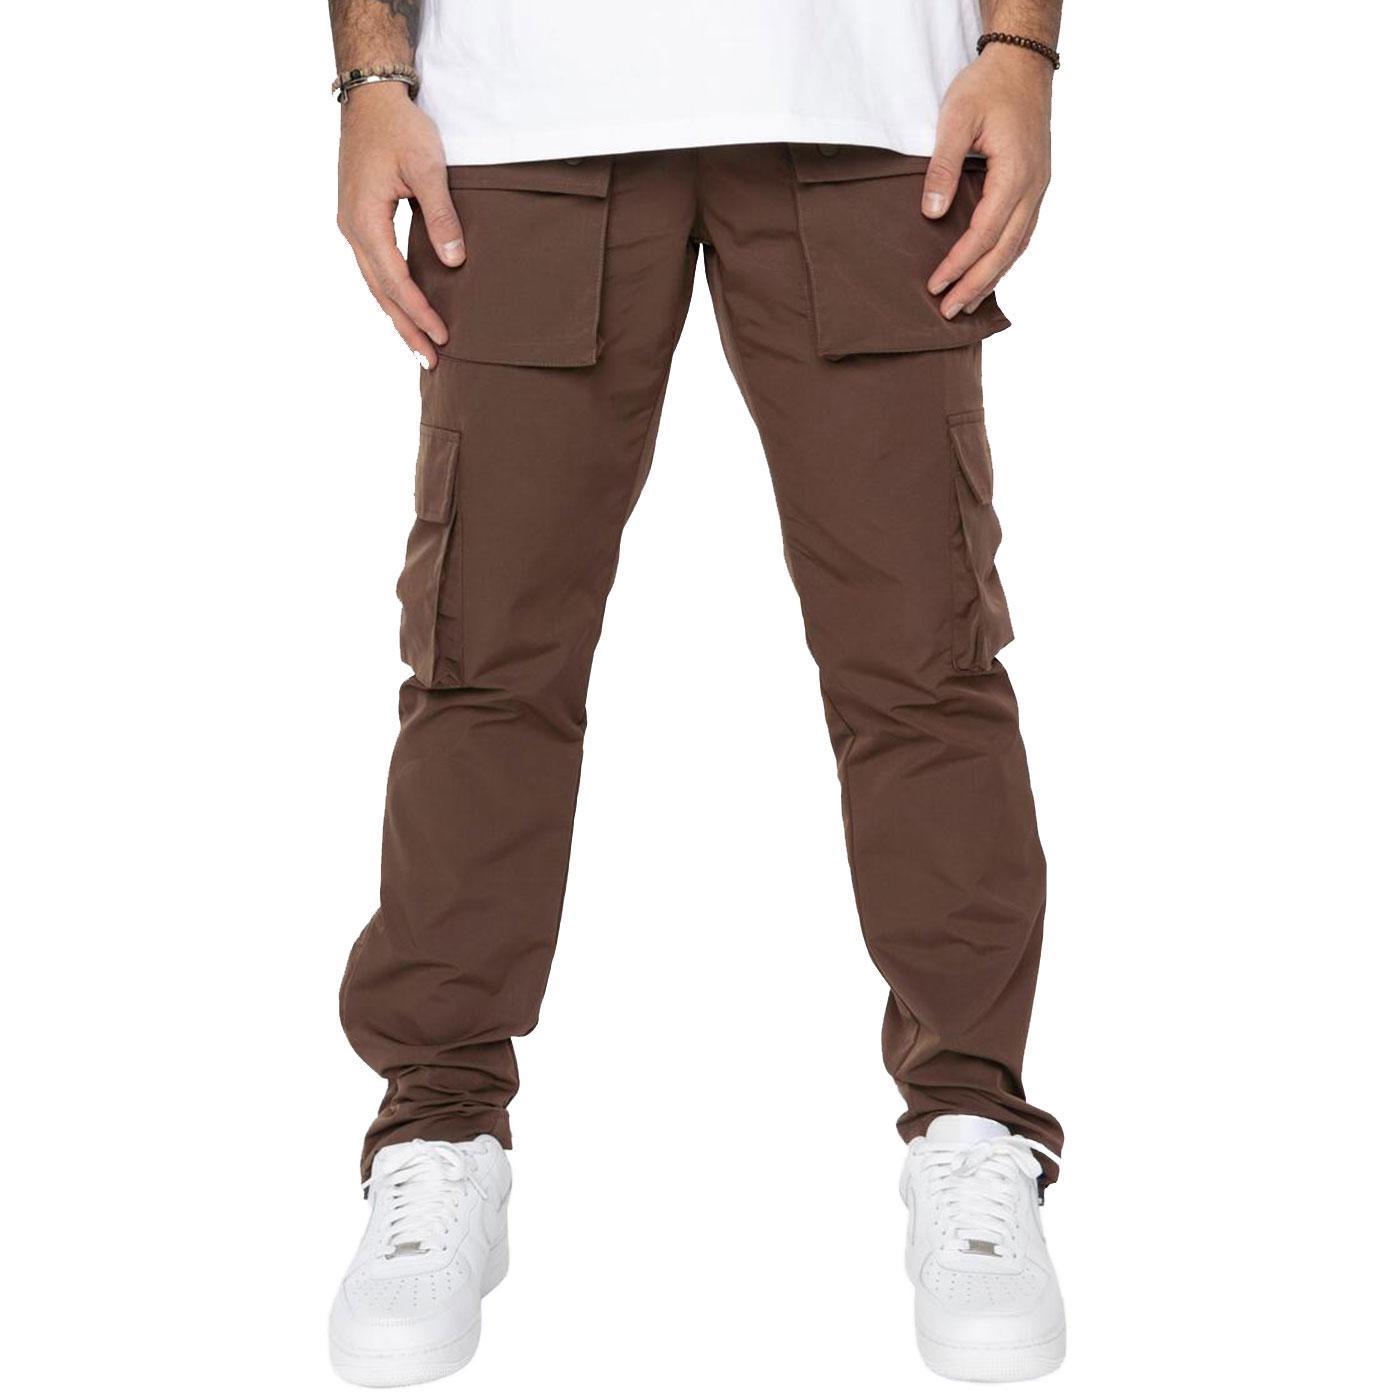 Snap Cargo Pants (Brown)